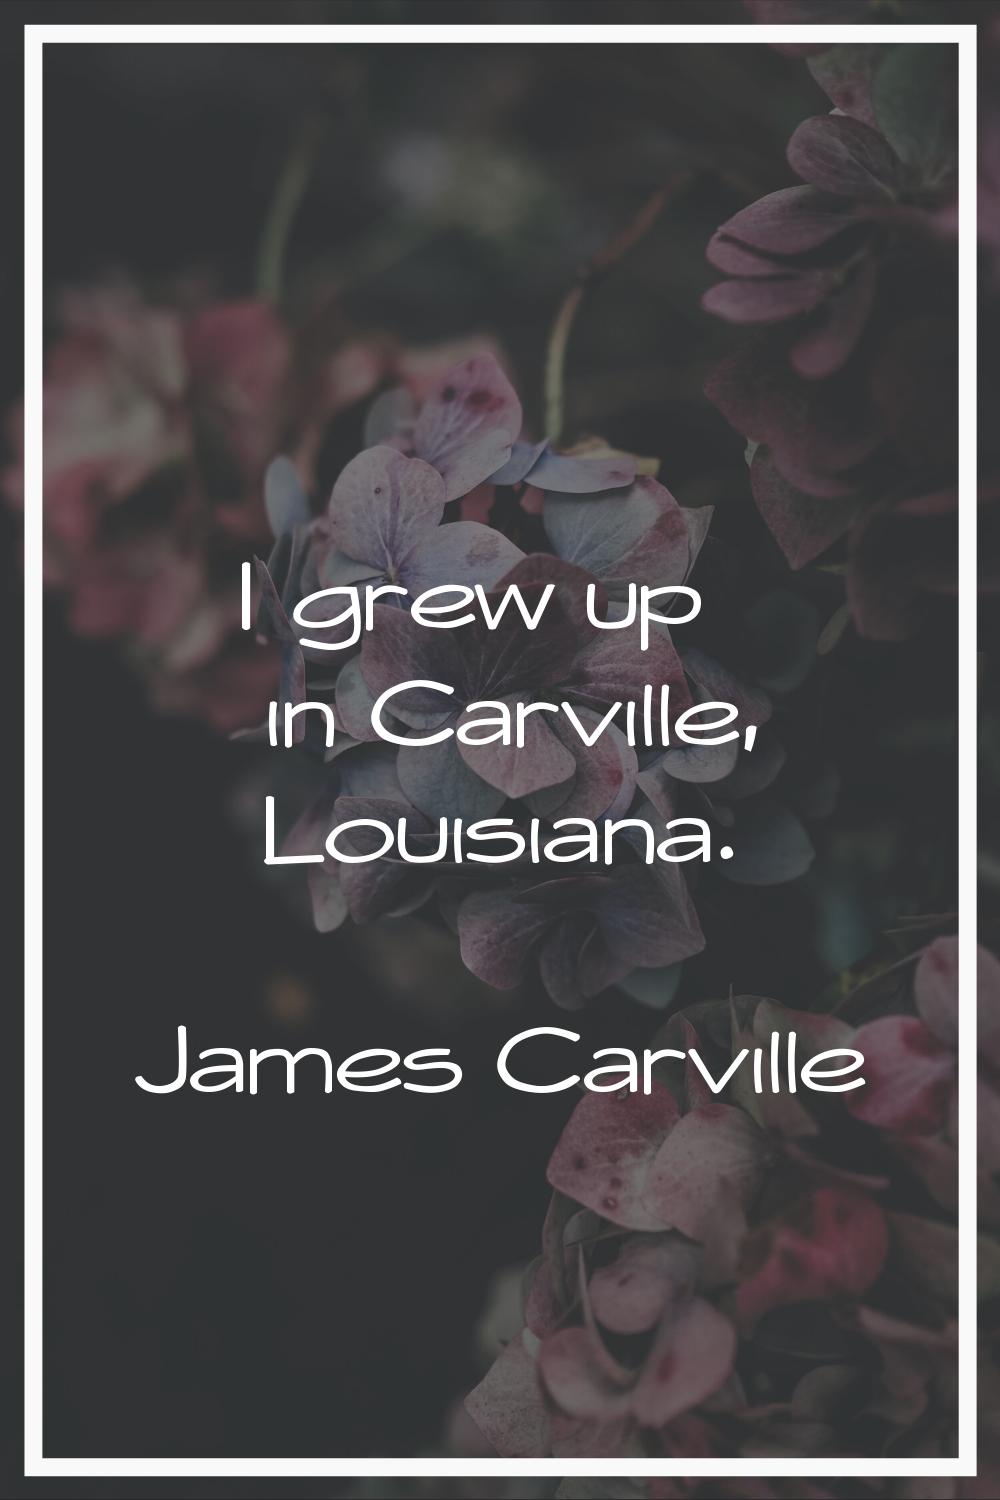 I grew up in Carville, Louisiana.